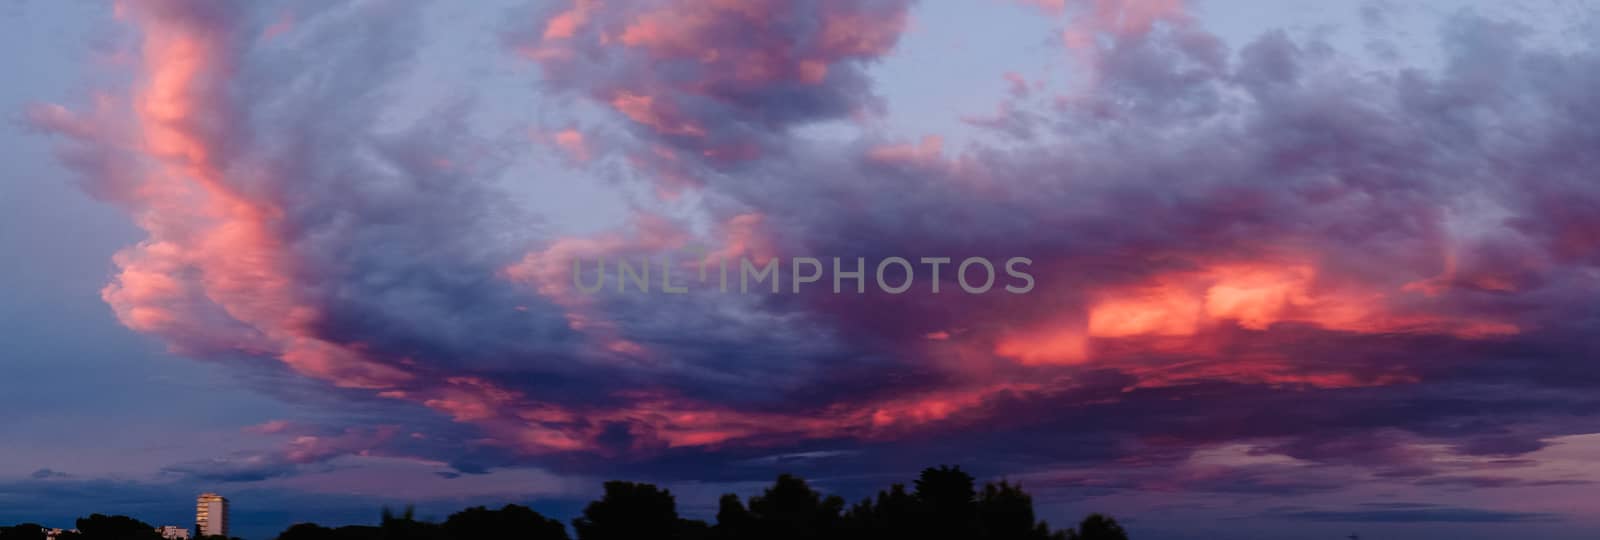 Impacting sky panorama at sunset by mikelju